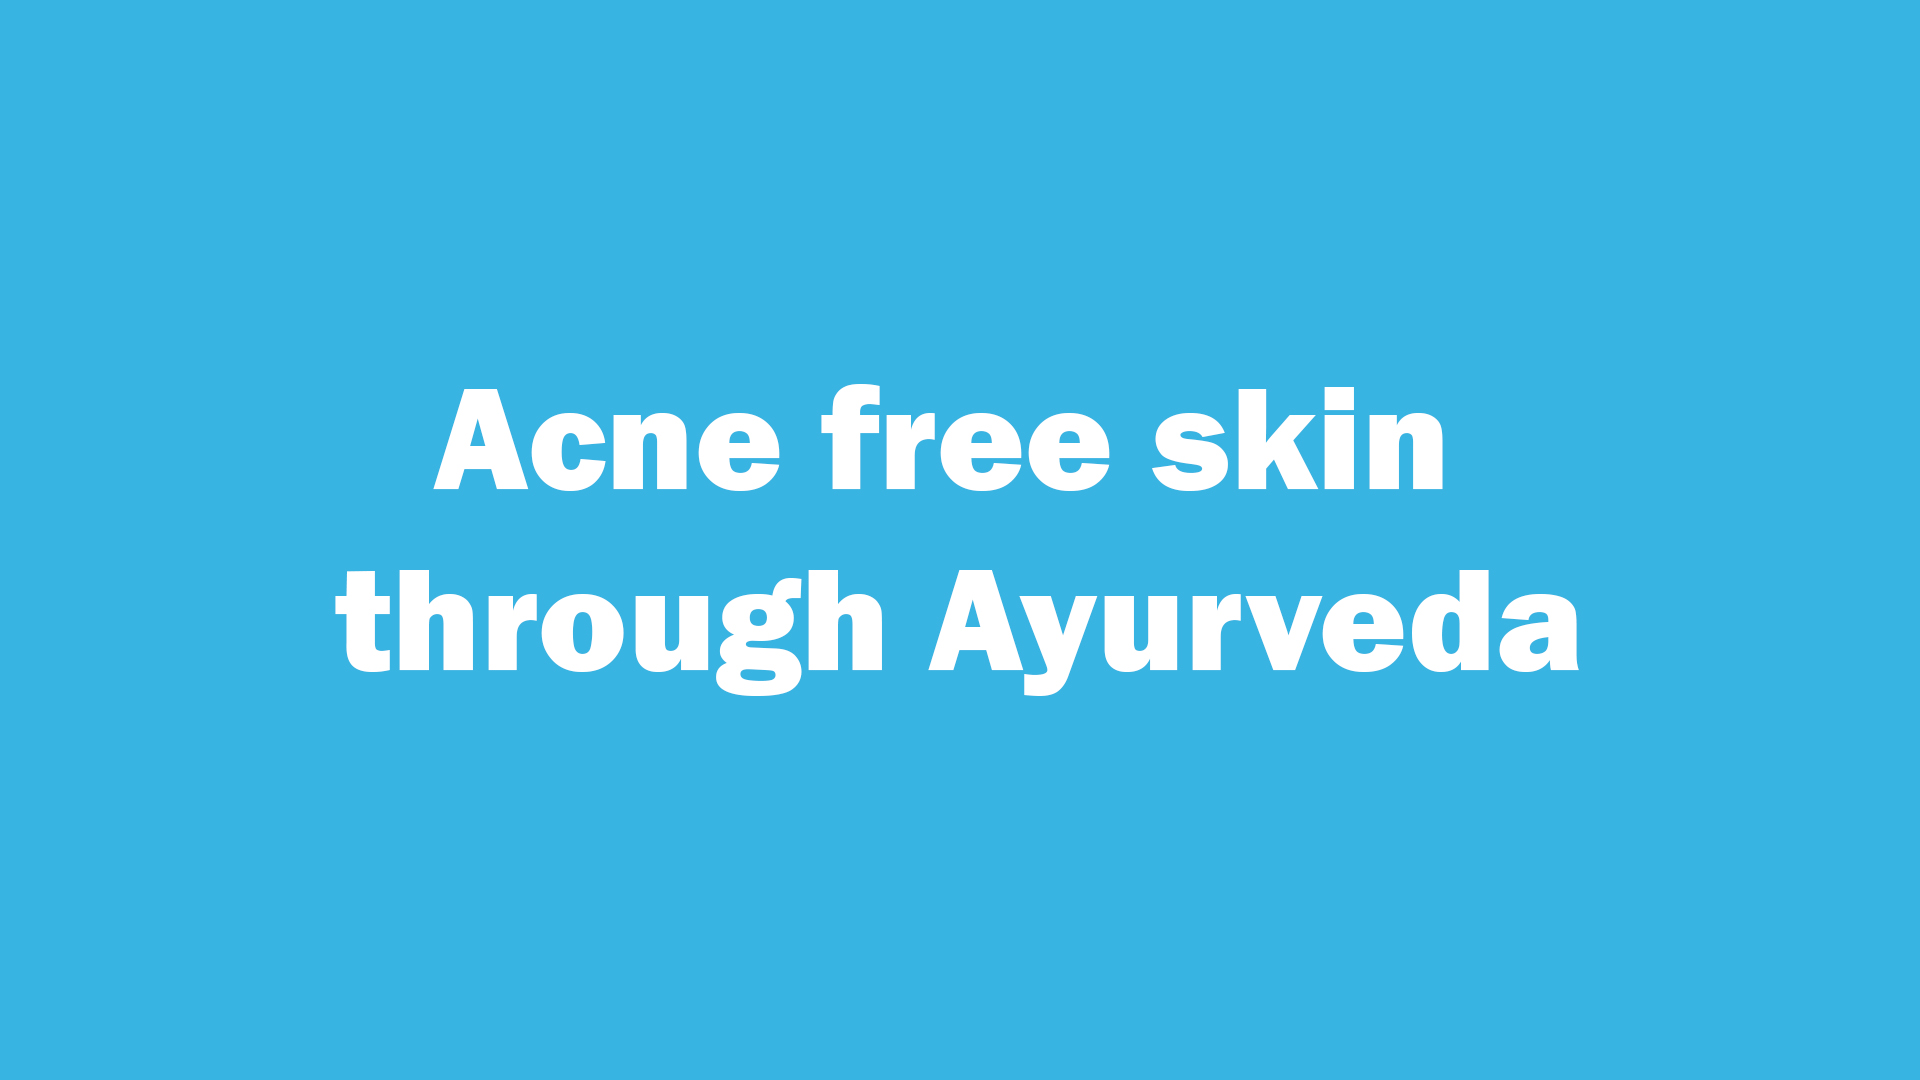 Acne free skin through Ayurveda